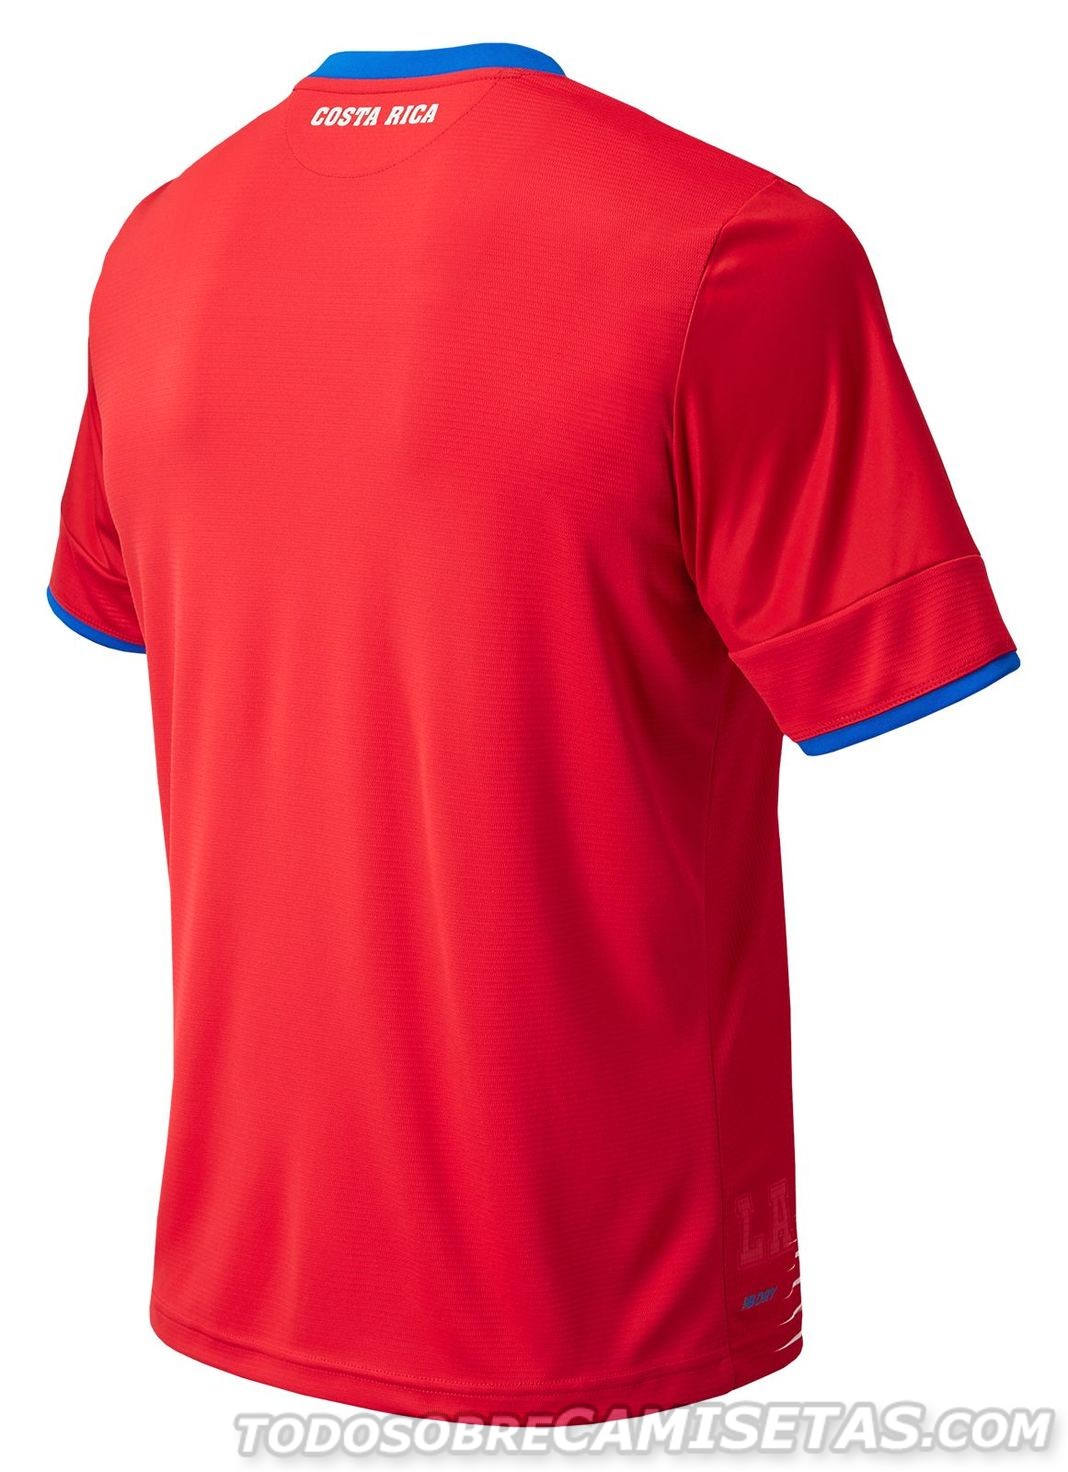 Camisetas New Balance de Costa Rica 2016-17